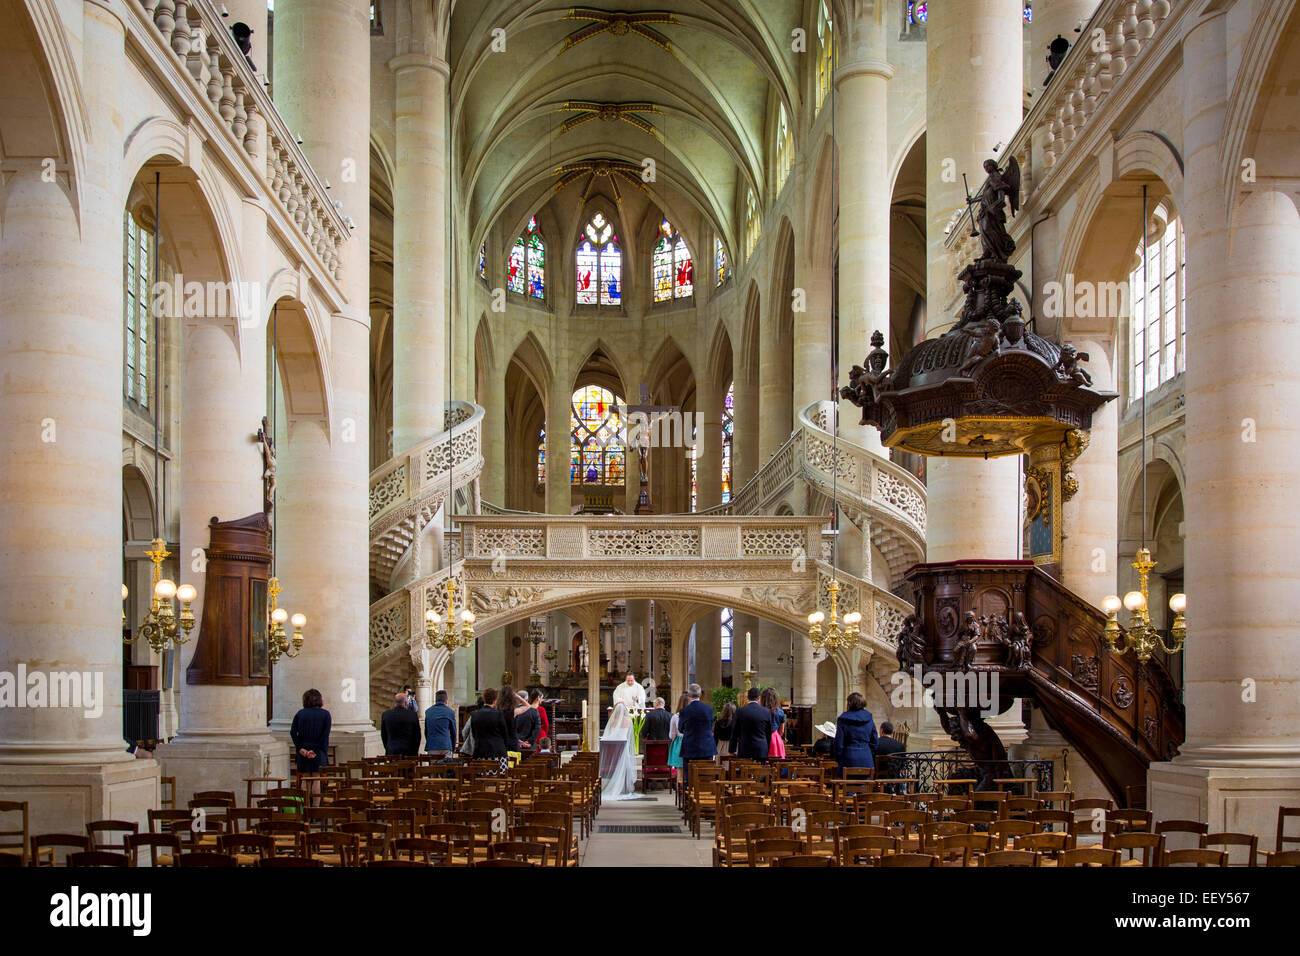 Wedding Ceremony Inside Eglise Saint Etienne Du Mont Latin Quarter Stock Photo Alamy